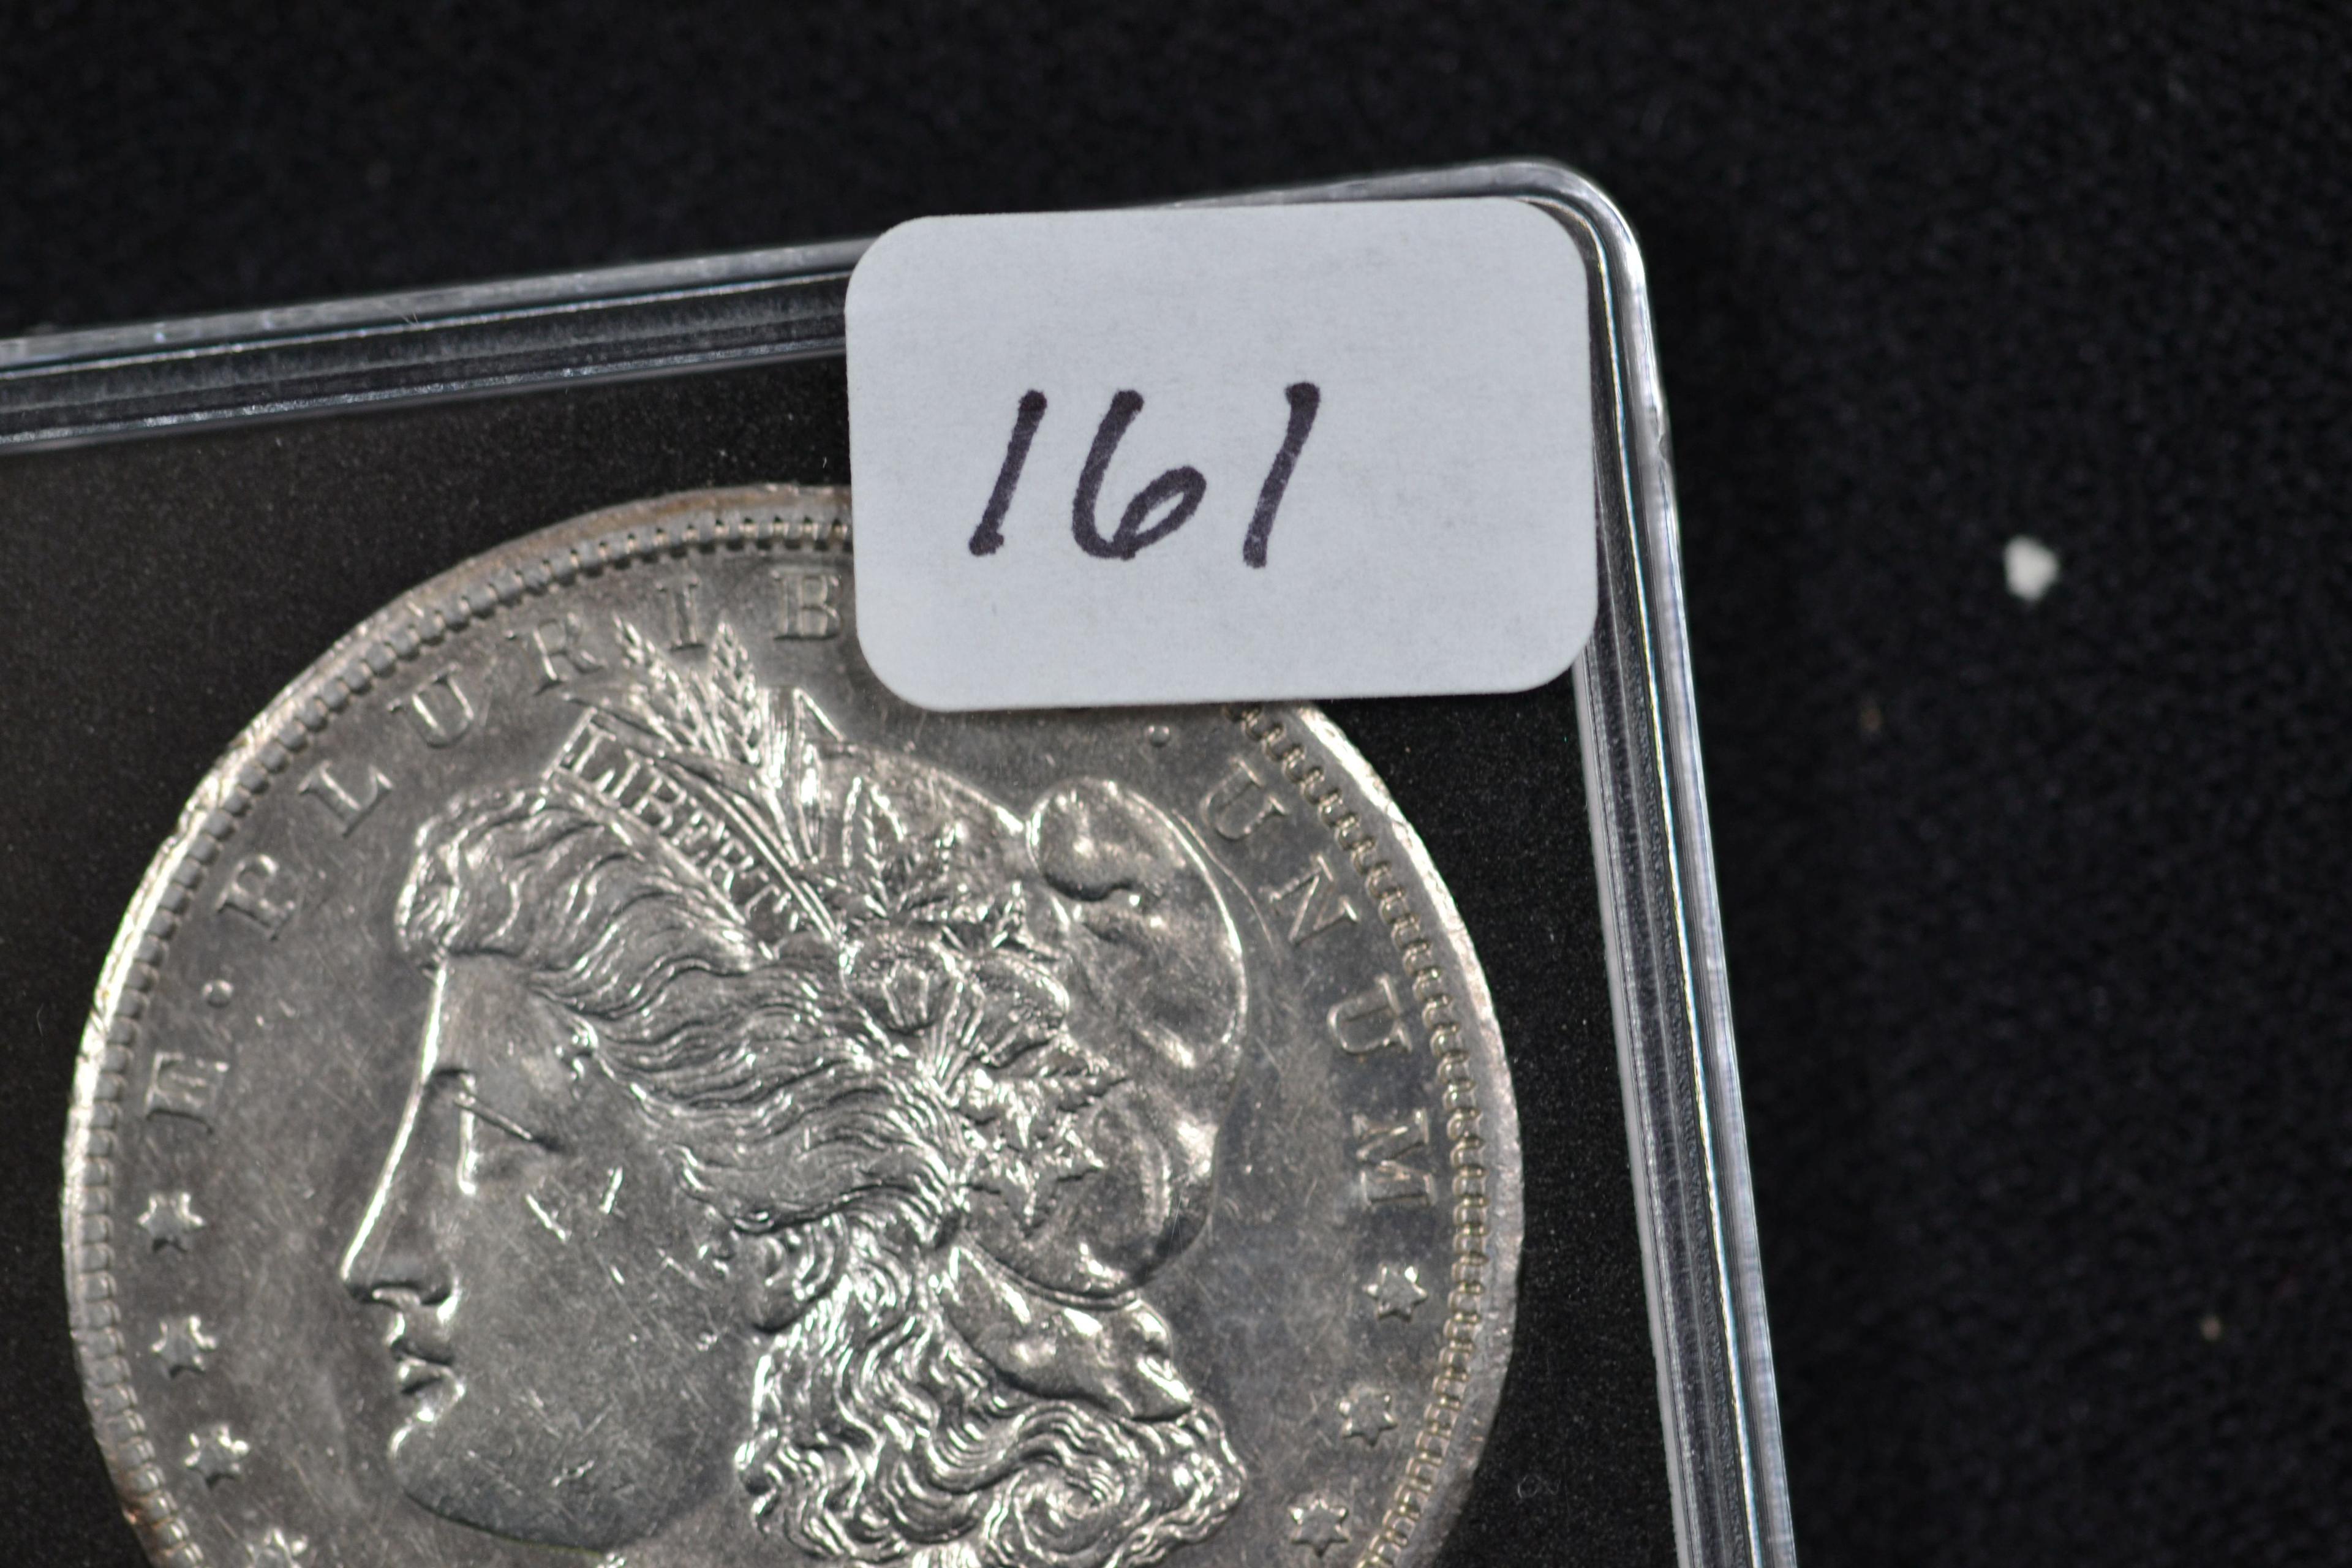 1893-CC Morgan Silver Dollar; MS 64